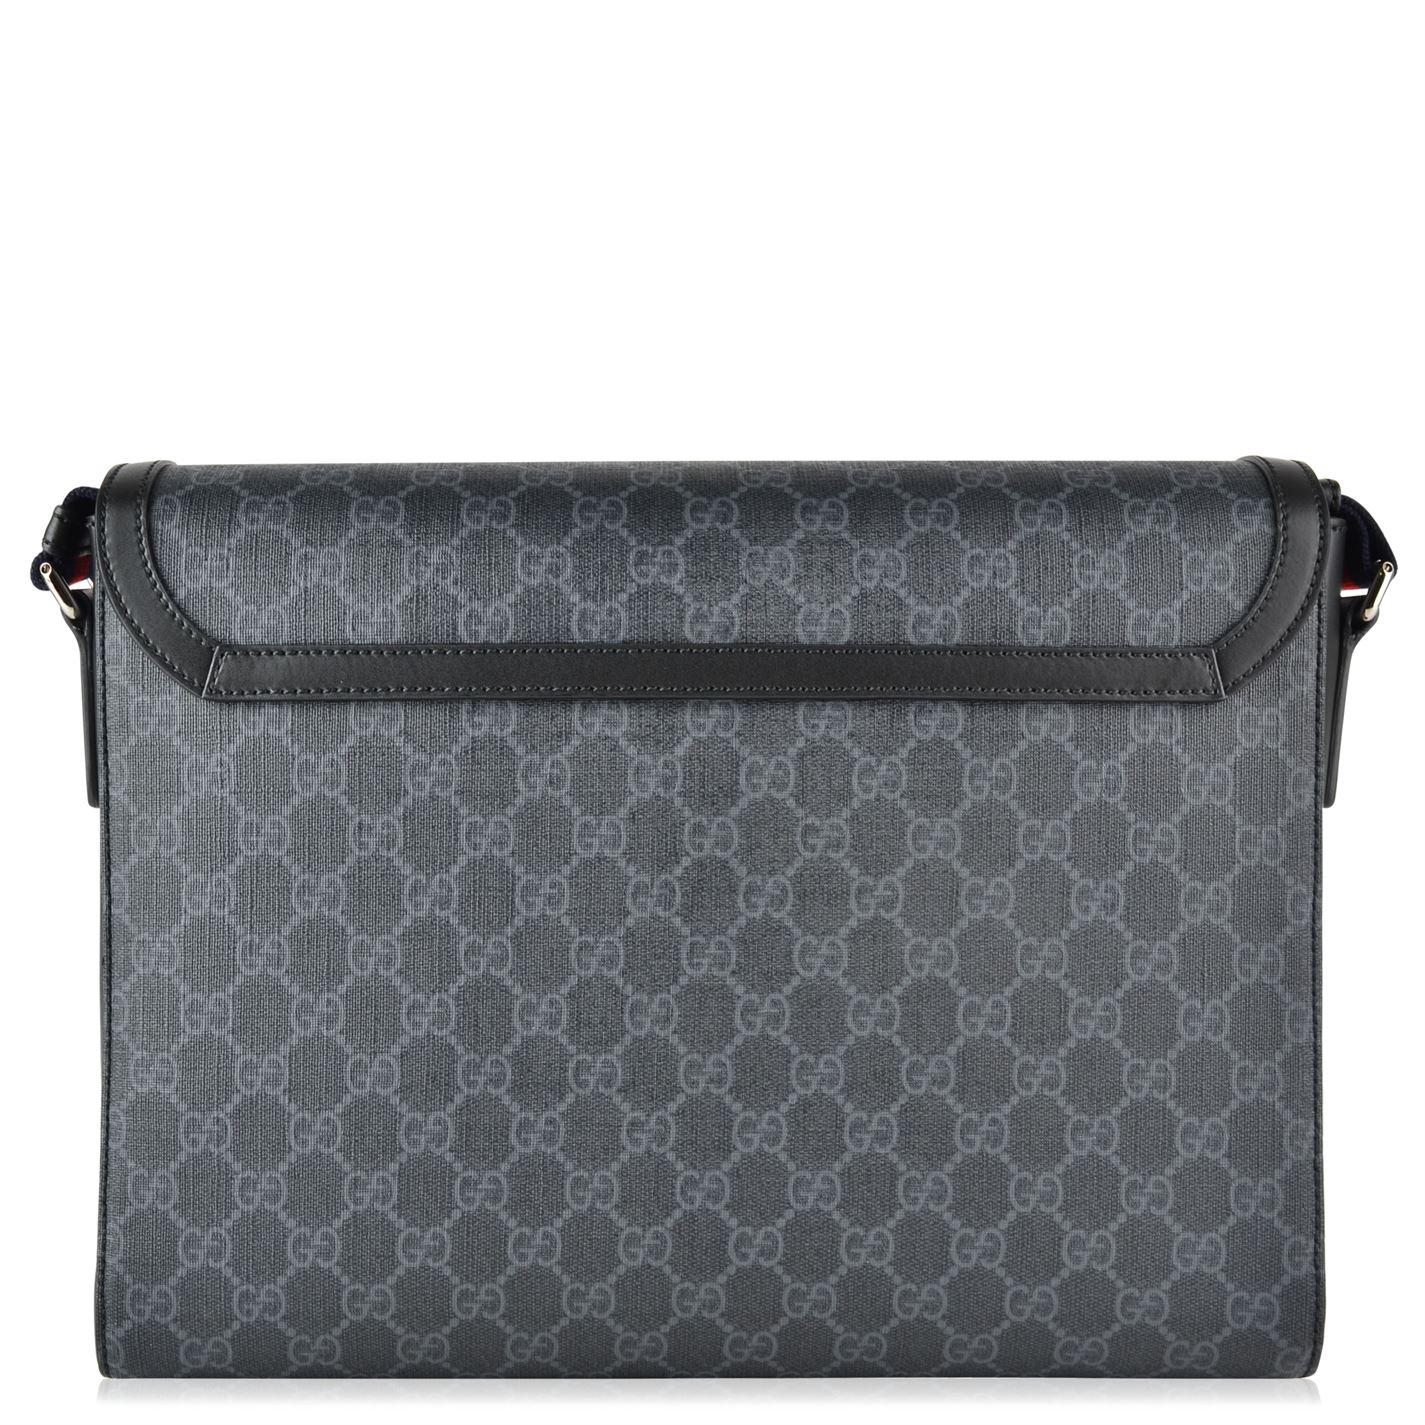 Gucci Canvas Gg Supreme Flap Messenger Bag in Black for Men - Lyst